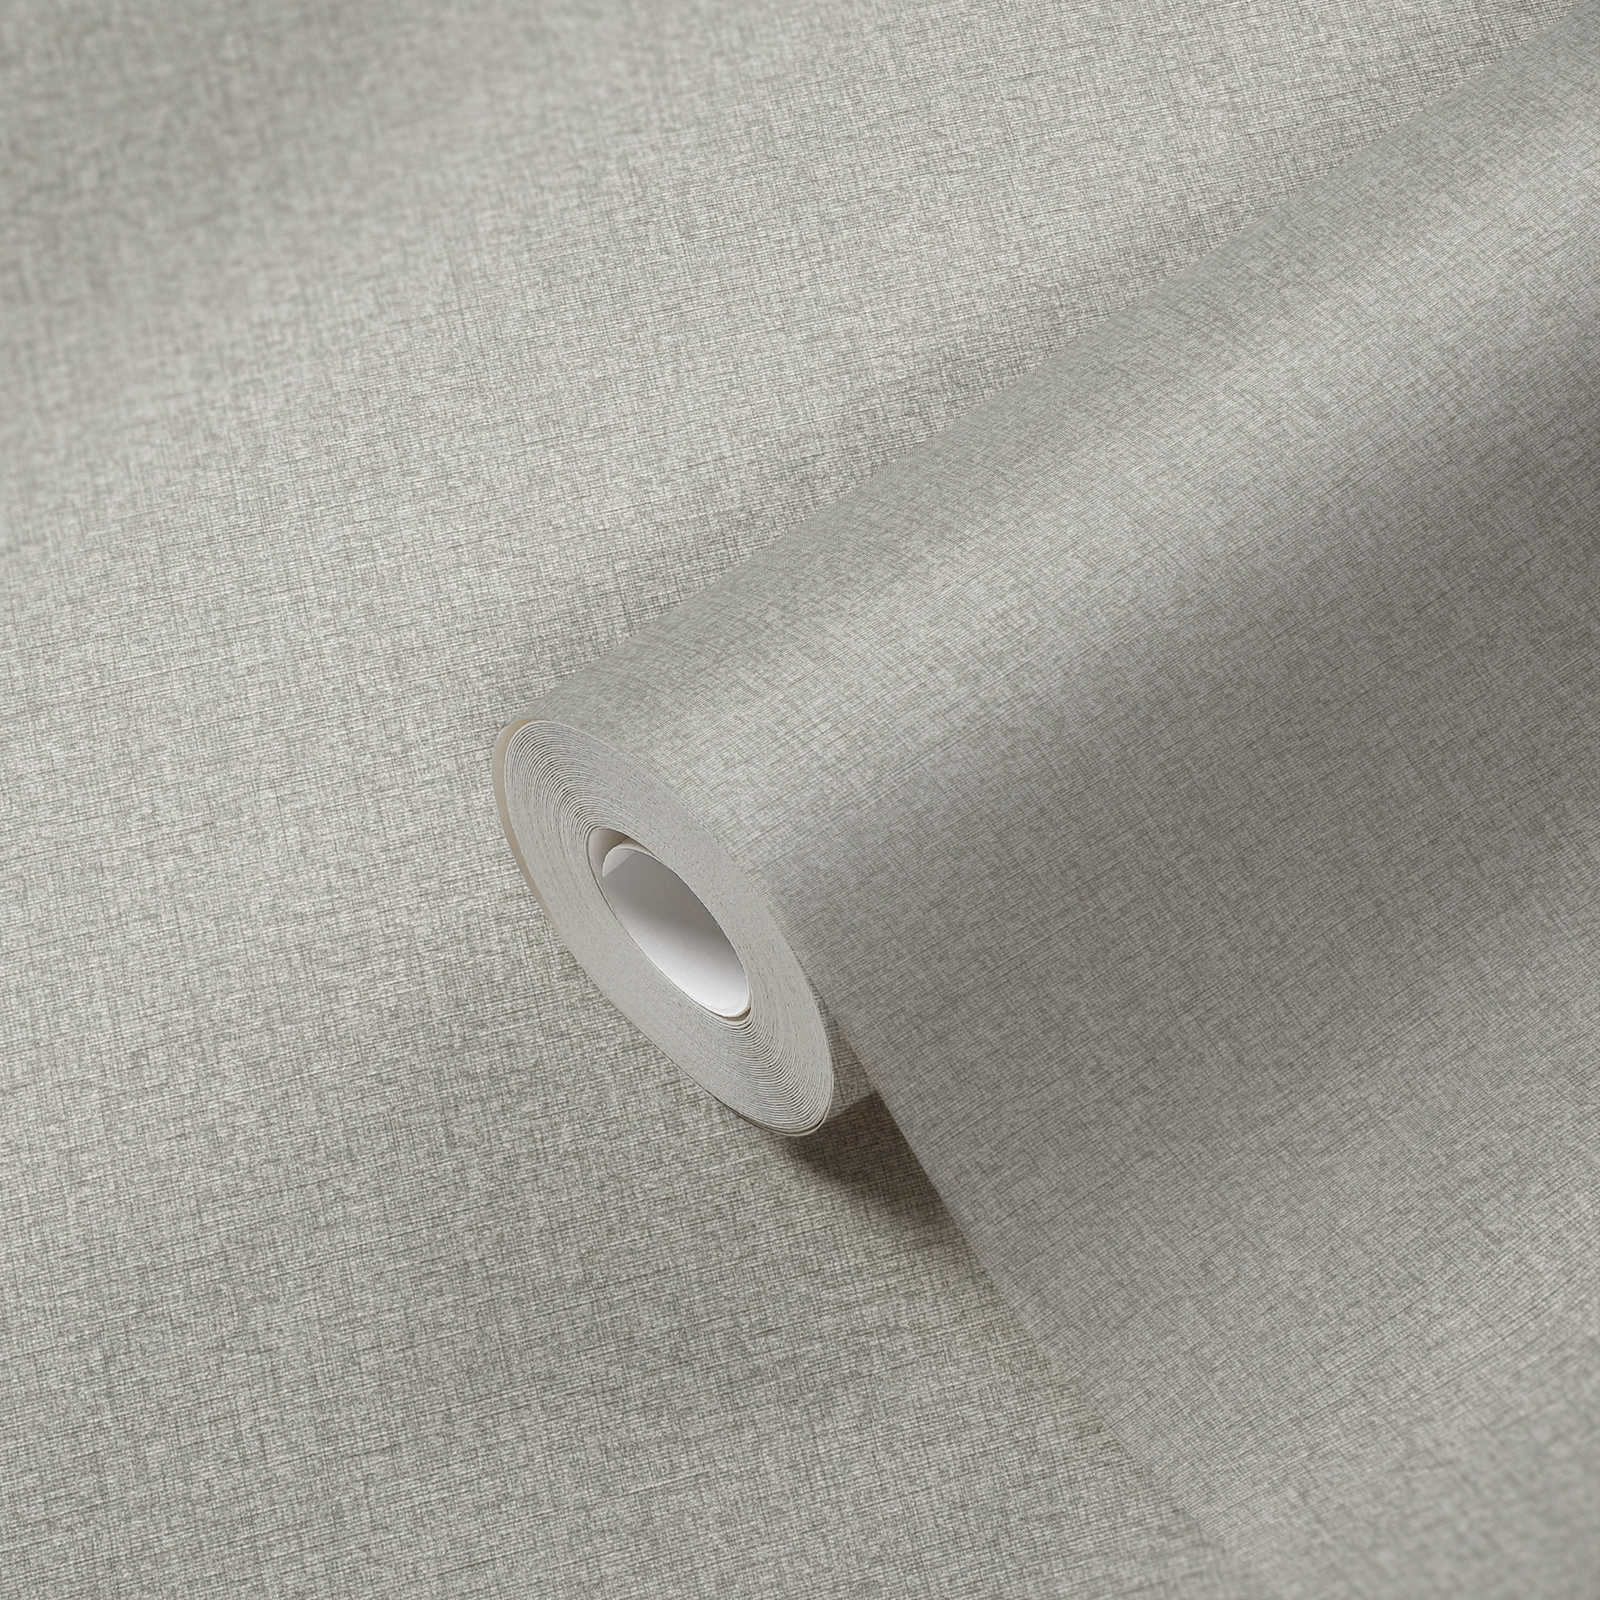             Plain wallpaper with textile structure, matt - grey
        